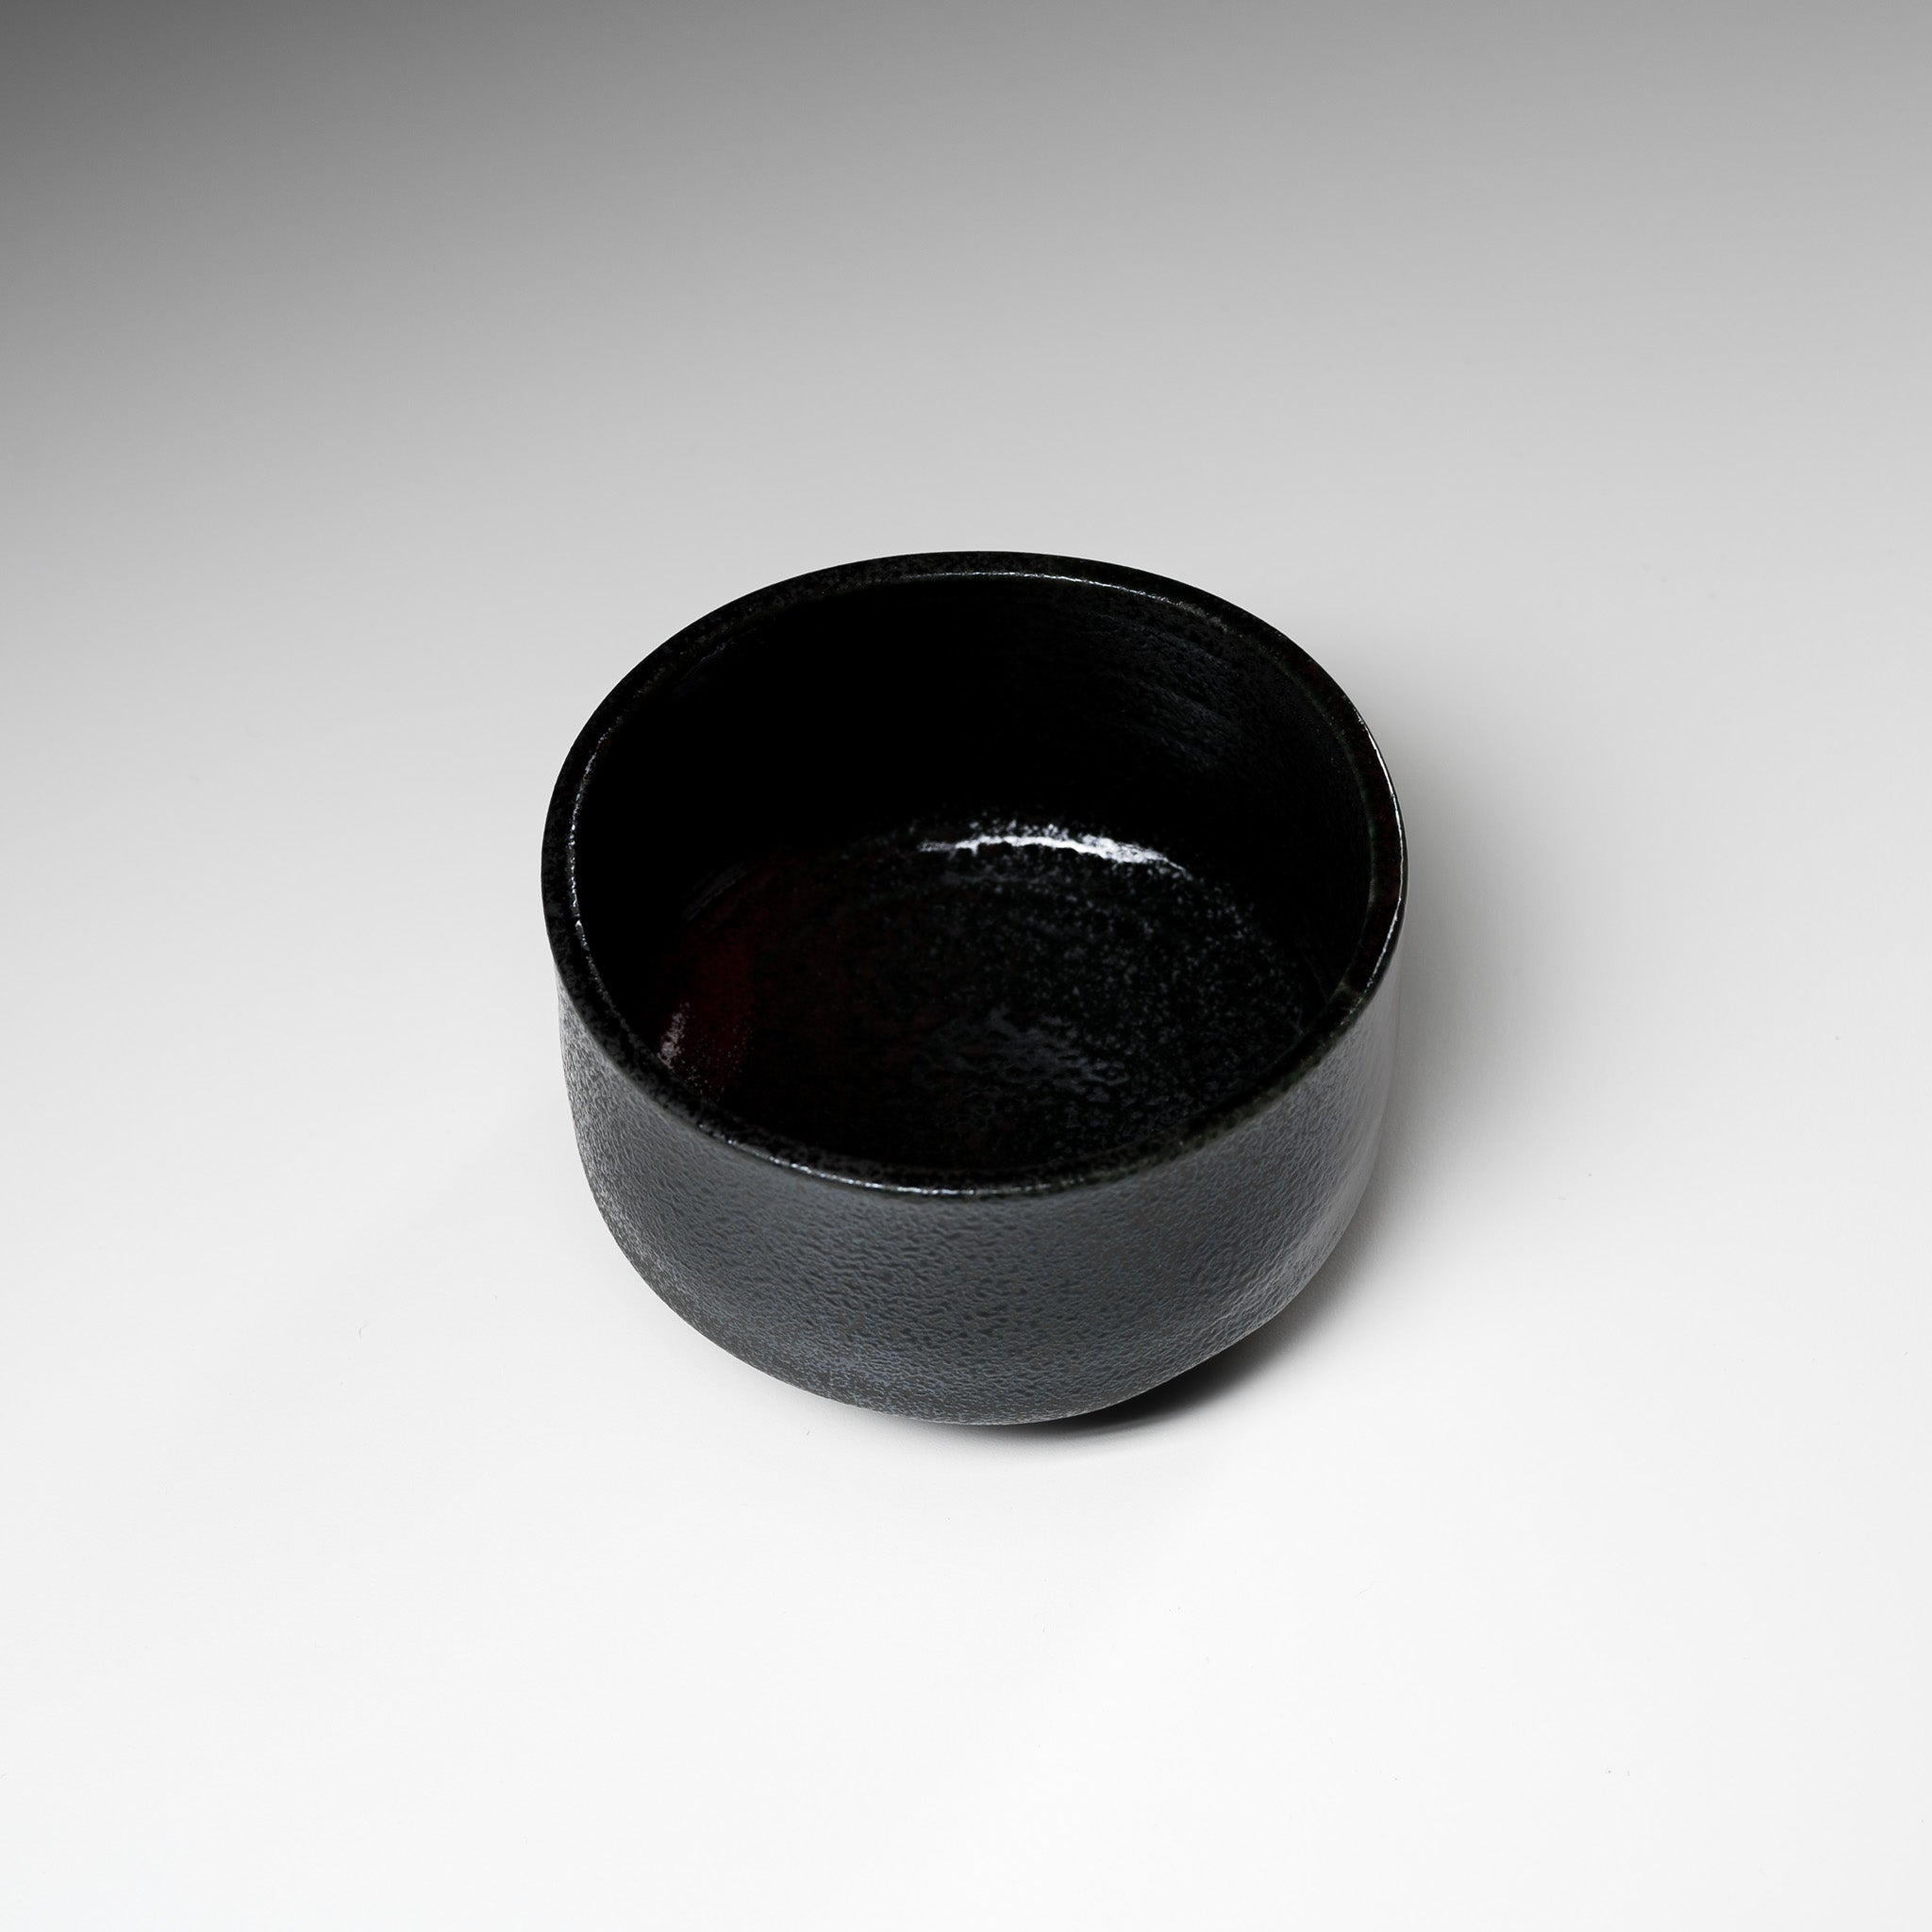 Matcha Bowl - Black Sand / 抹茶碗 黒砂金化粧